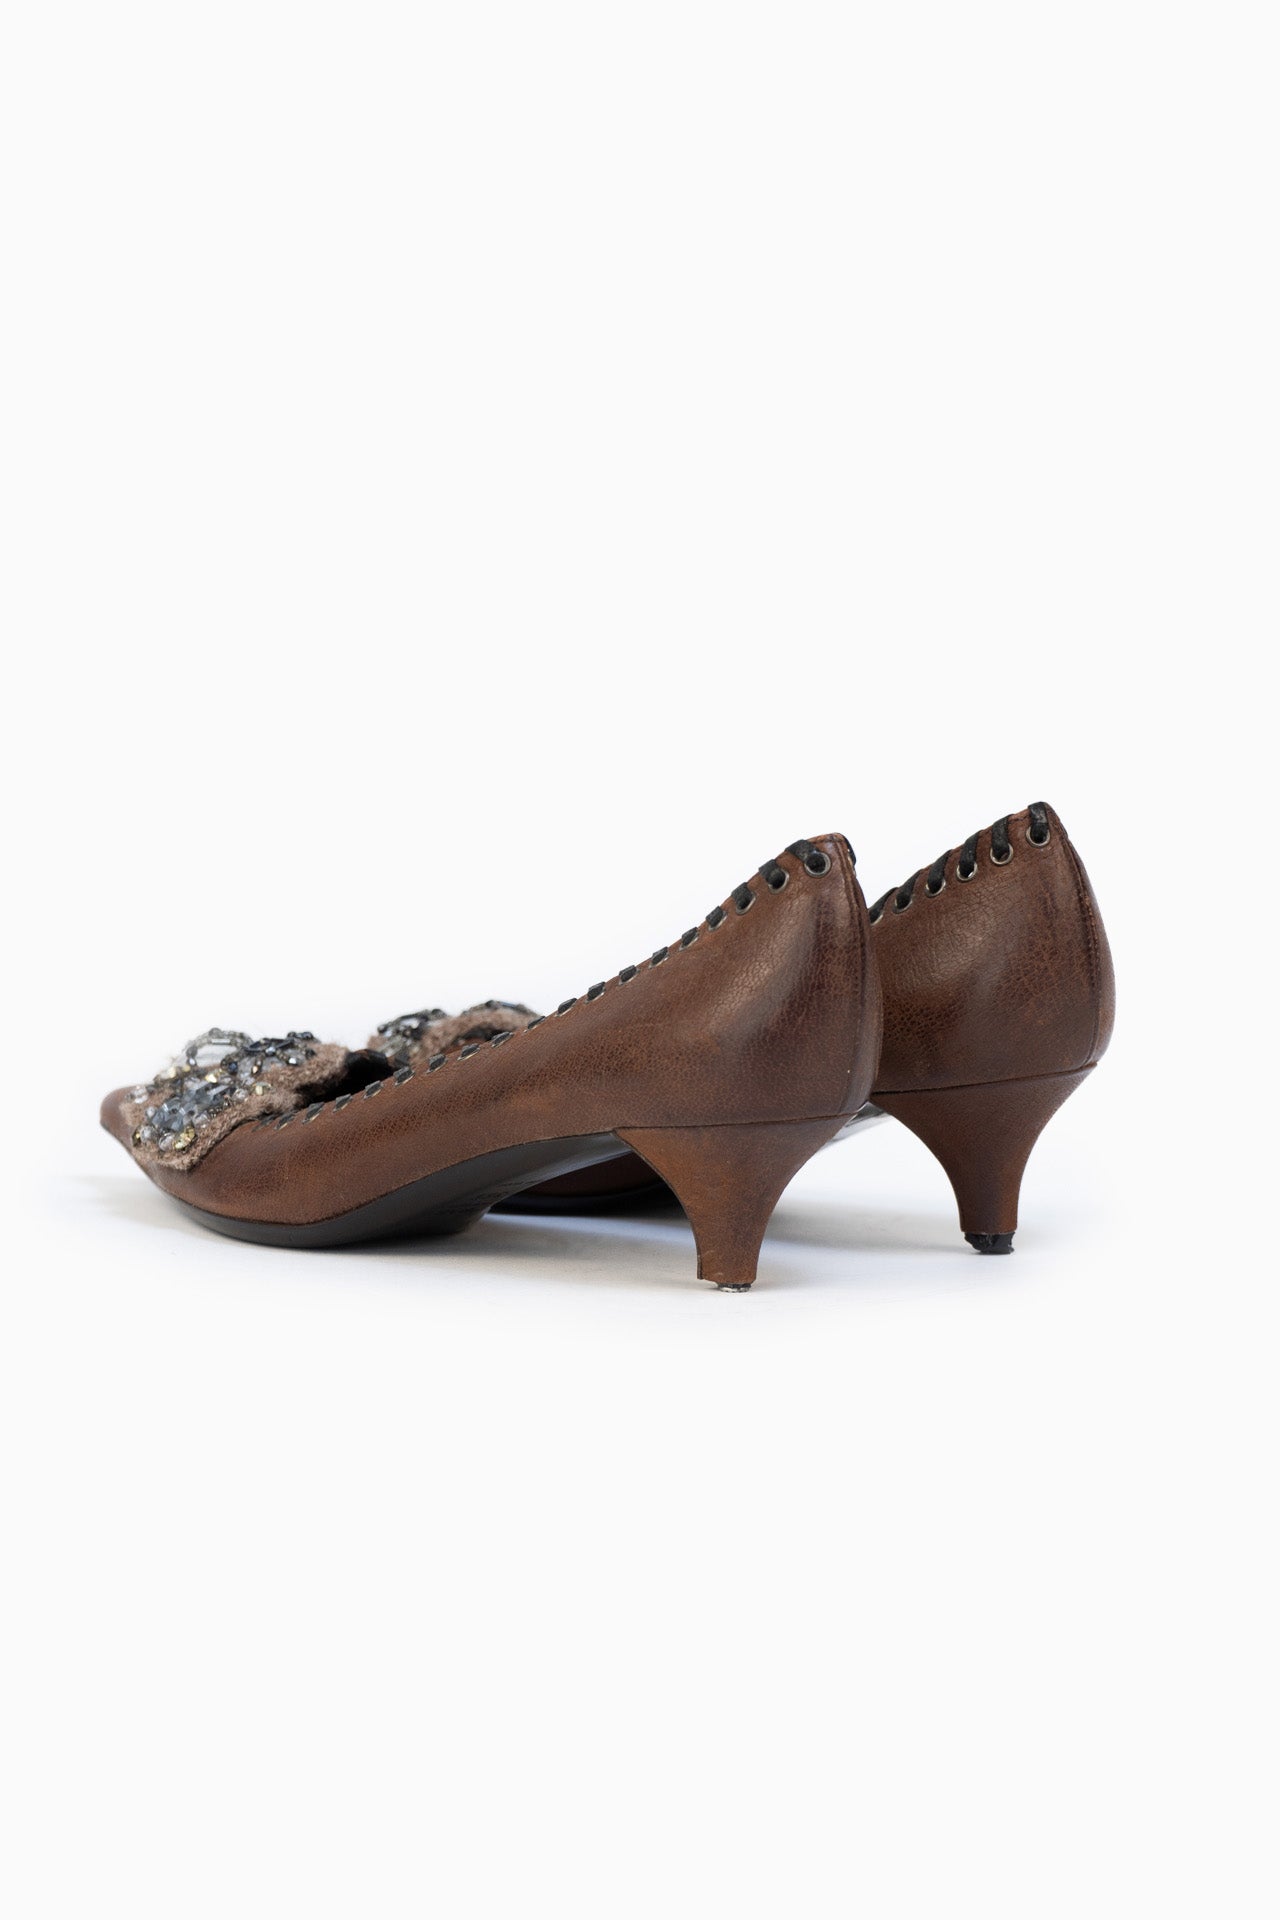 Brown Leather Prada Heels - size 36.5